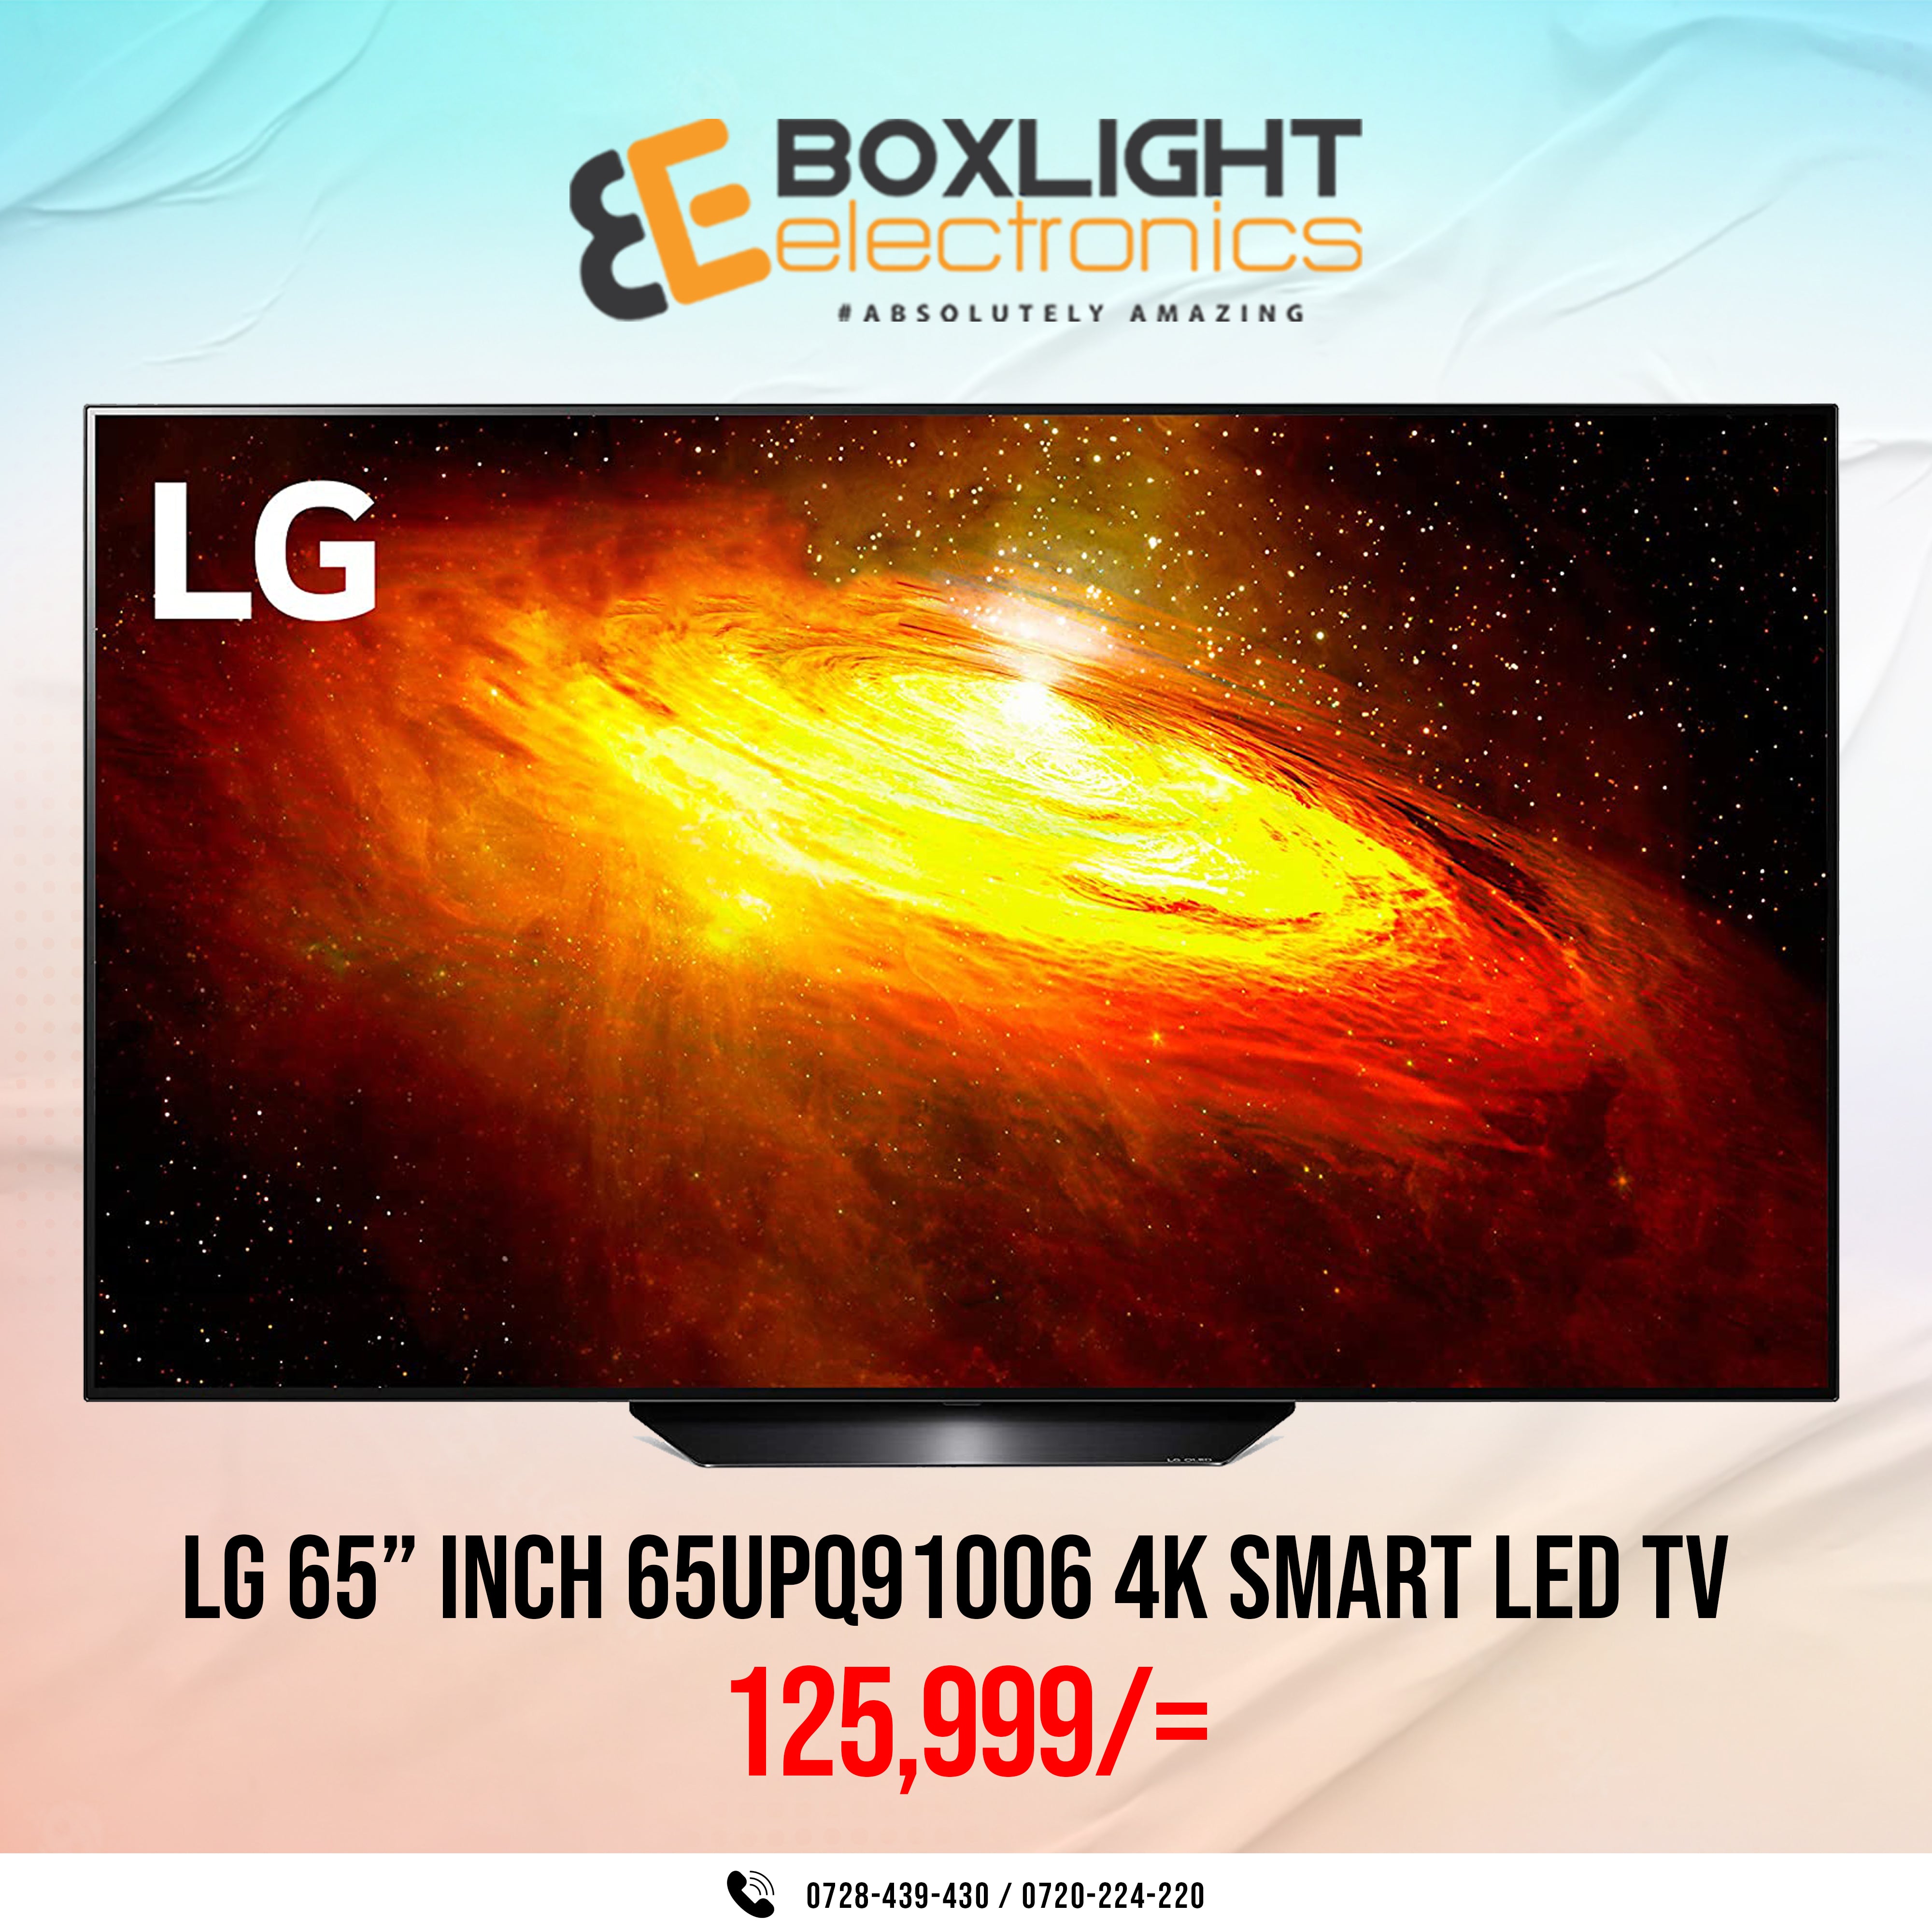 LG 65UPQ91006 65” Inch 4K Smart LED TV